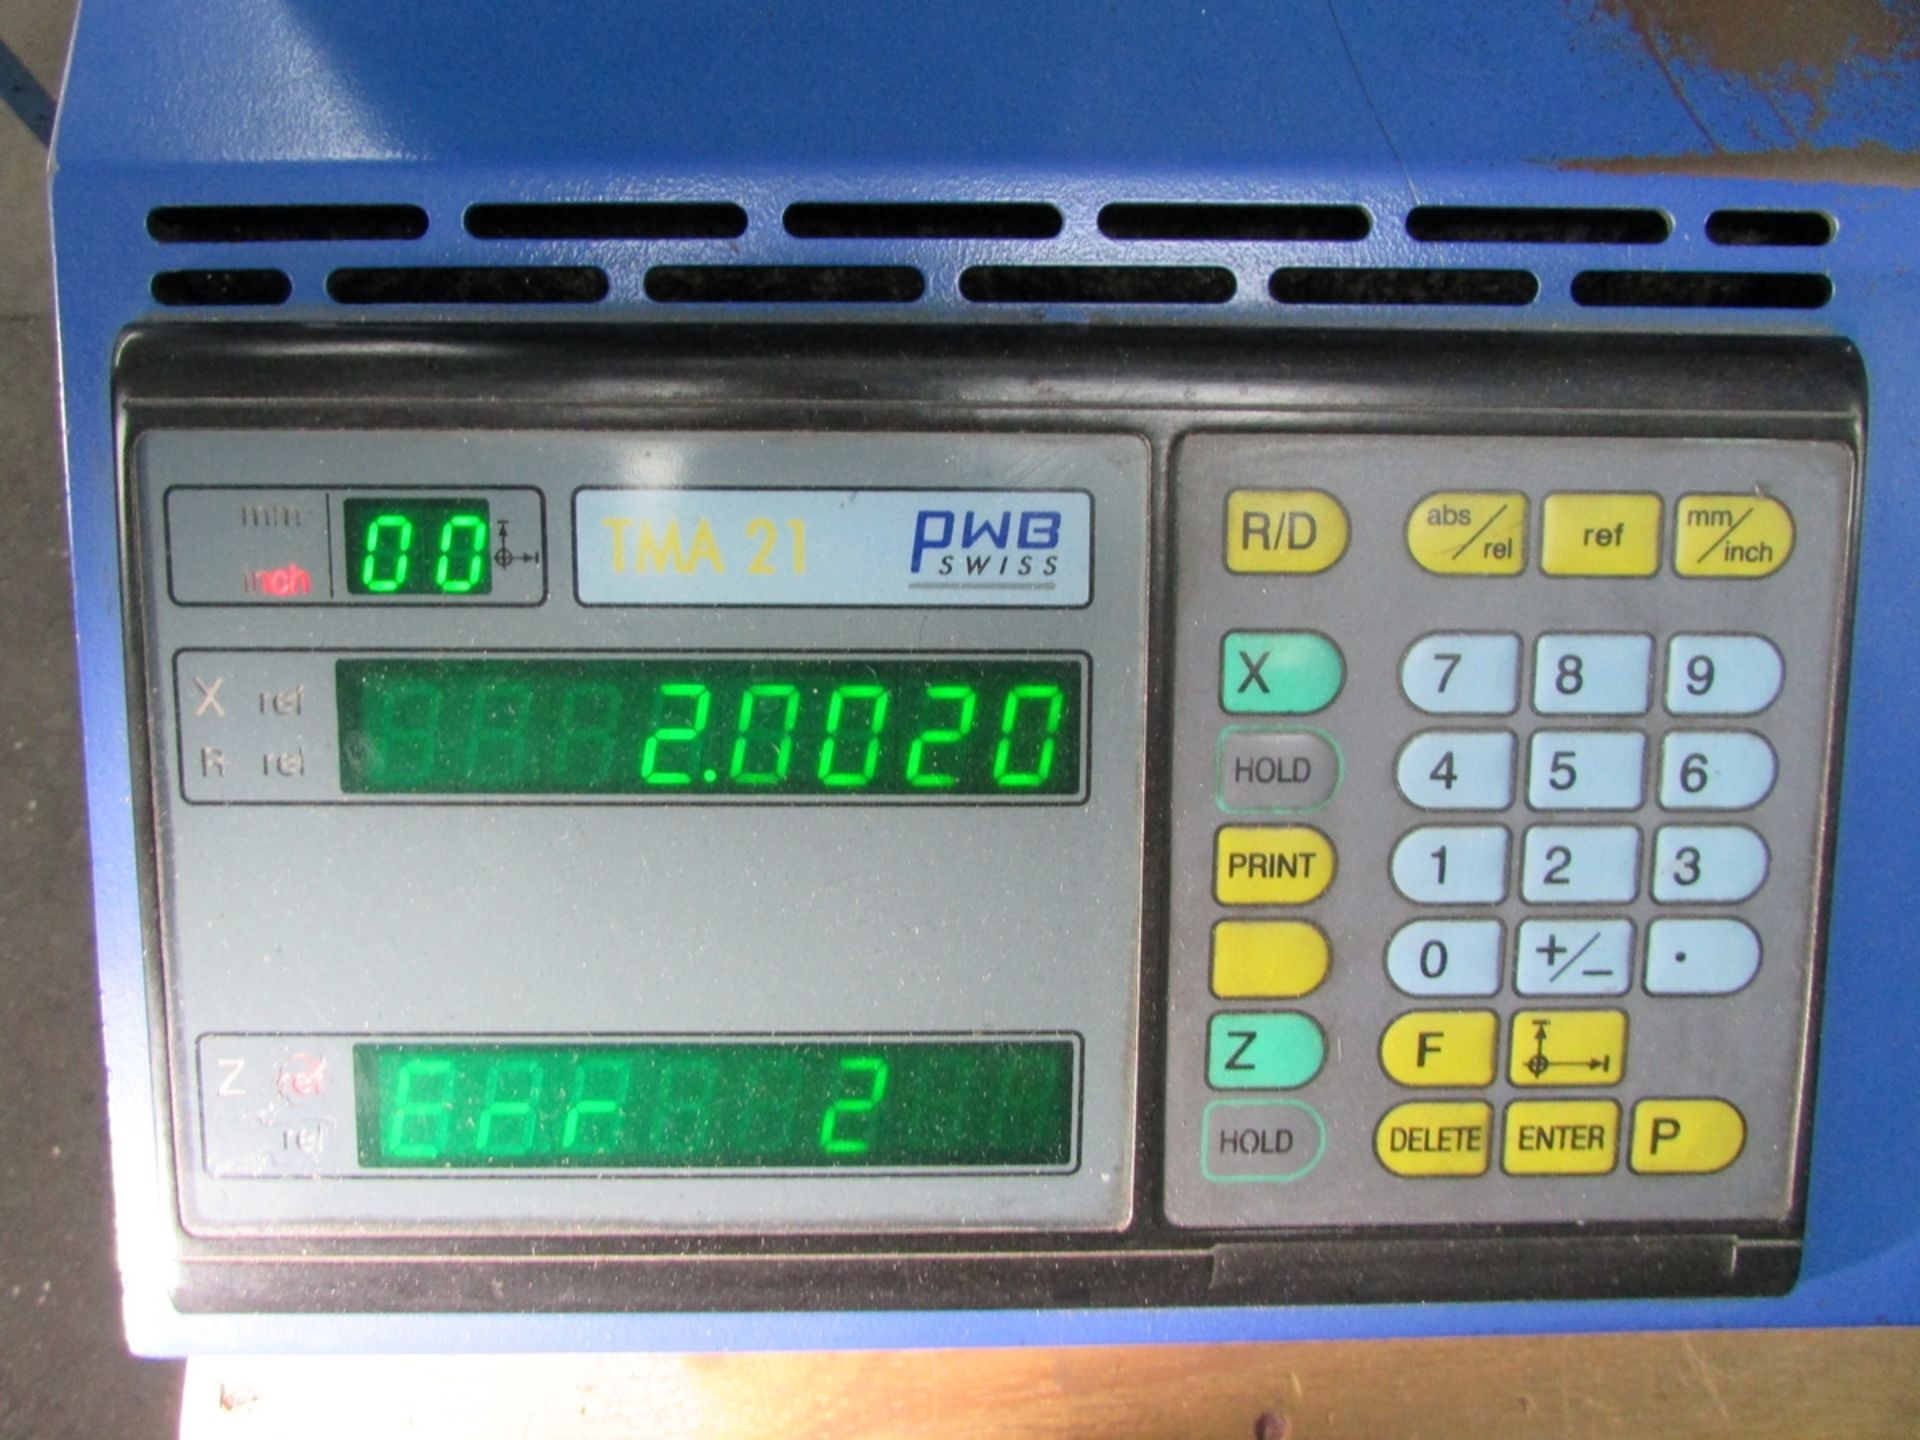 PWB SWISS 50 TAPER TOOL PRE-SETTER, MODEL TMA 21, DRO, 120V, (DELAYED PICKUP UNTIL APRIL 30, 2023) - Image 5 of 7